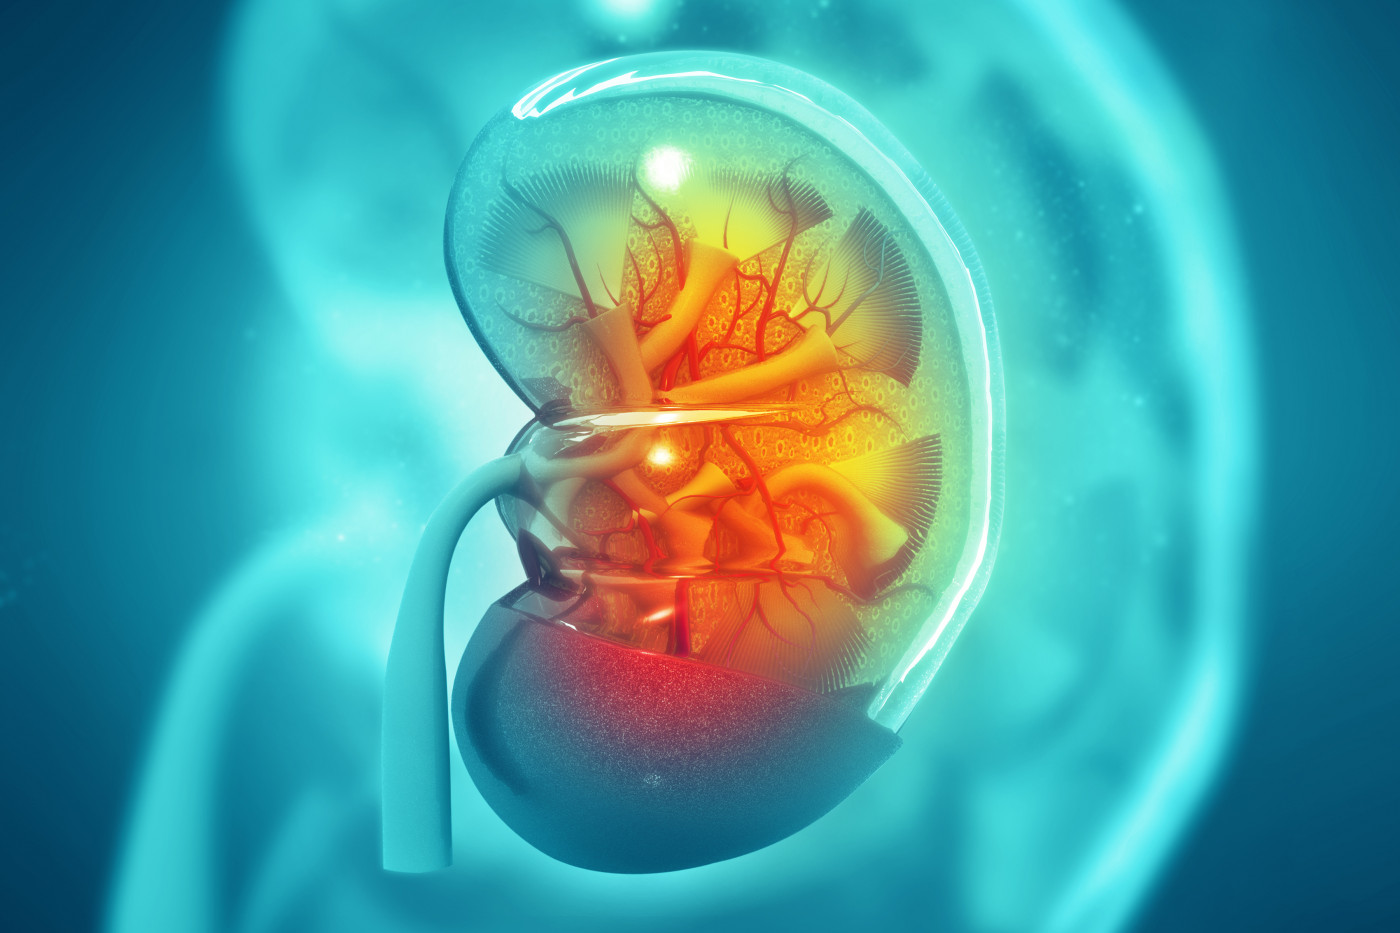 early ERT linked to better outcomes/fabrydiseasenews.com/chronic kidney disease